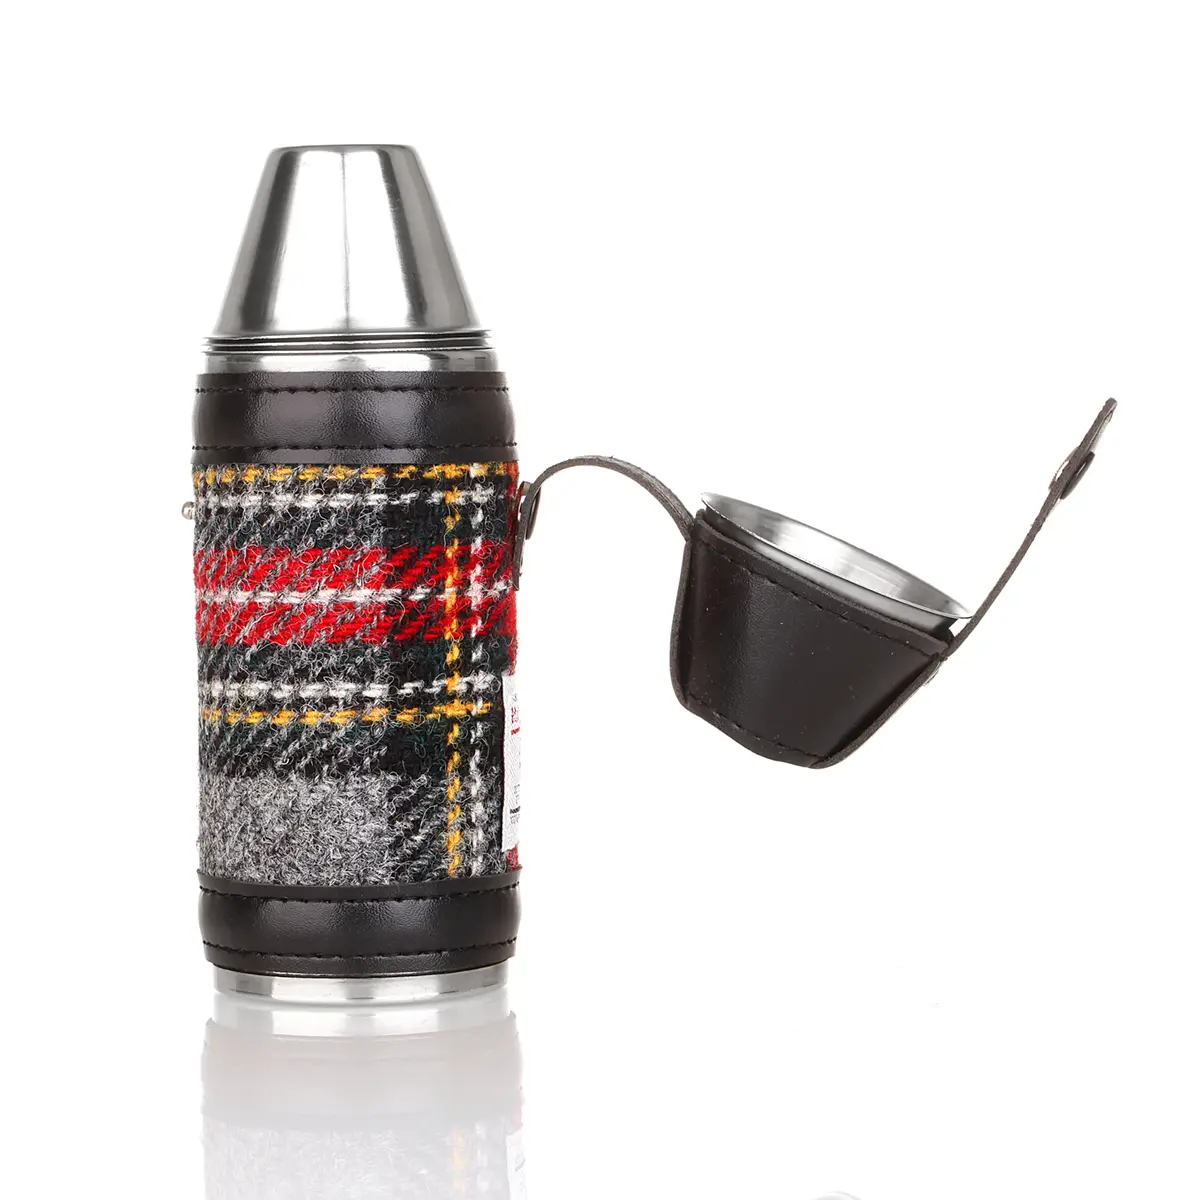 Harris Tweed Hunting Flask / Campingflasche in Grey and Red Tartan